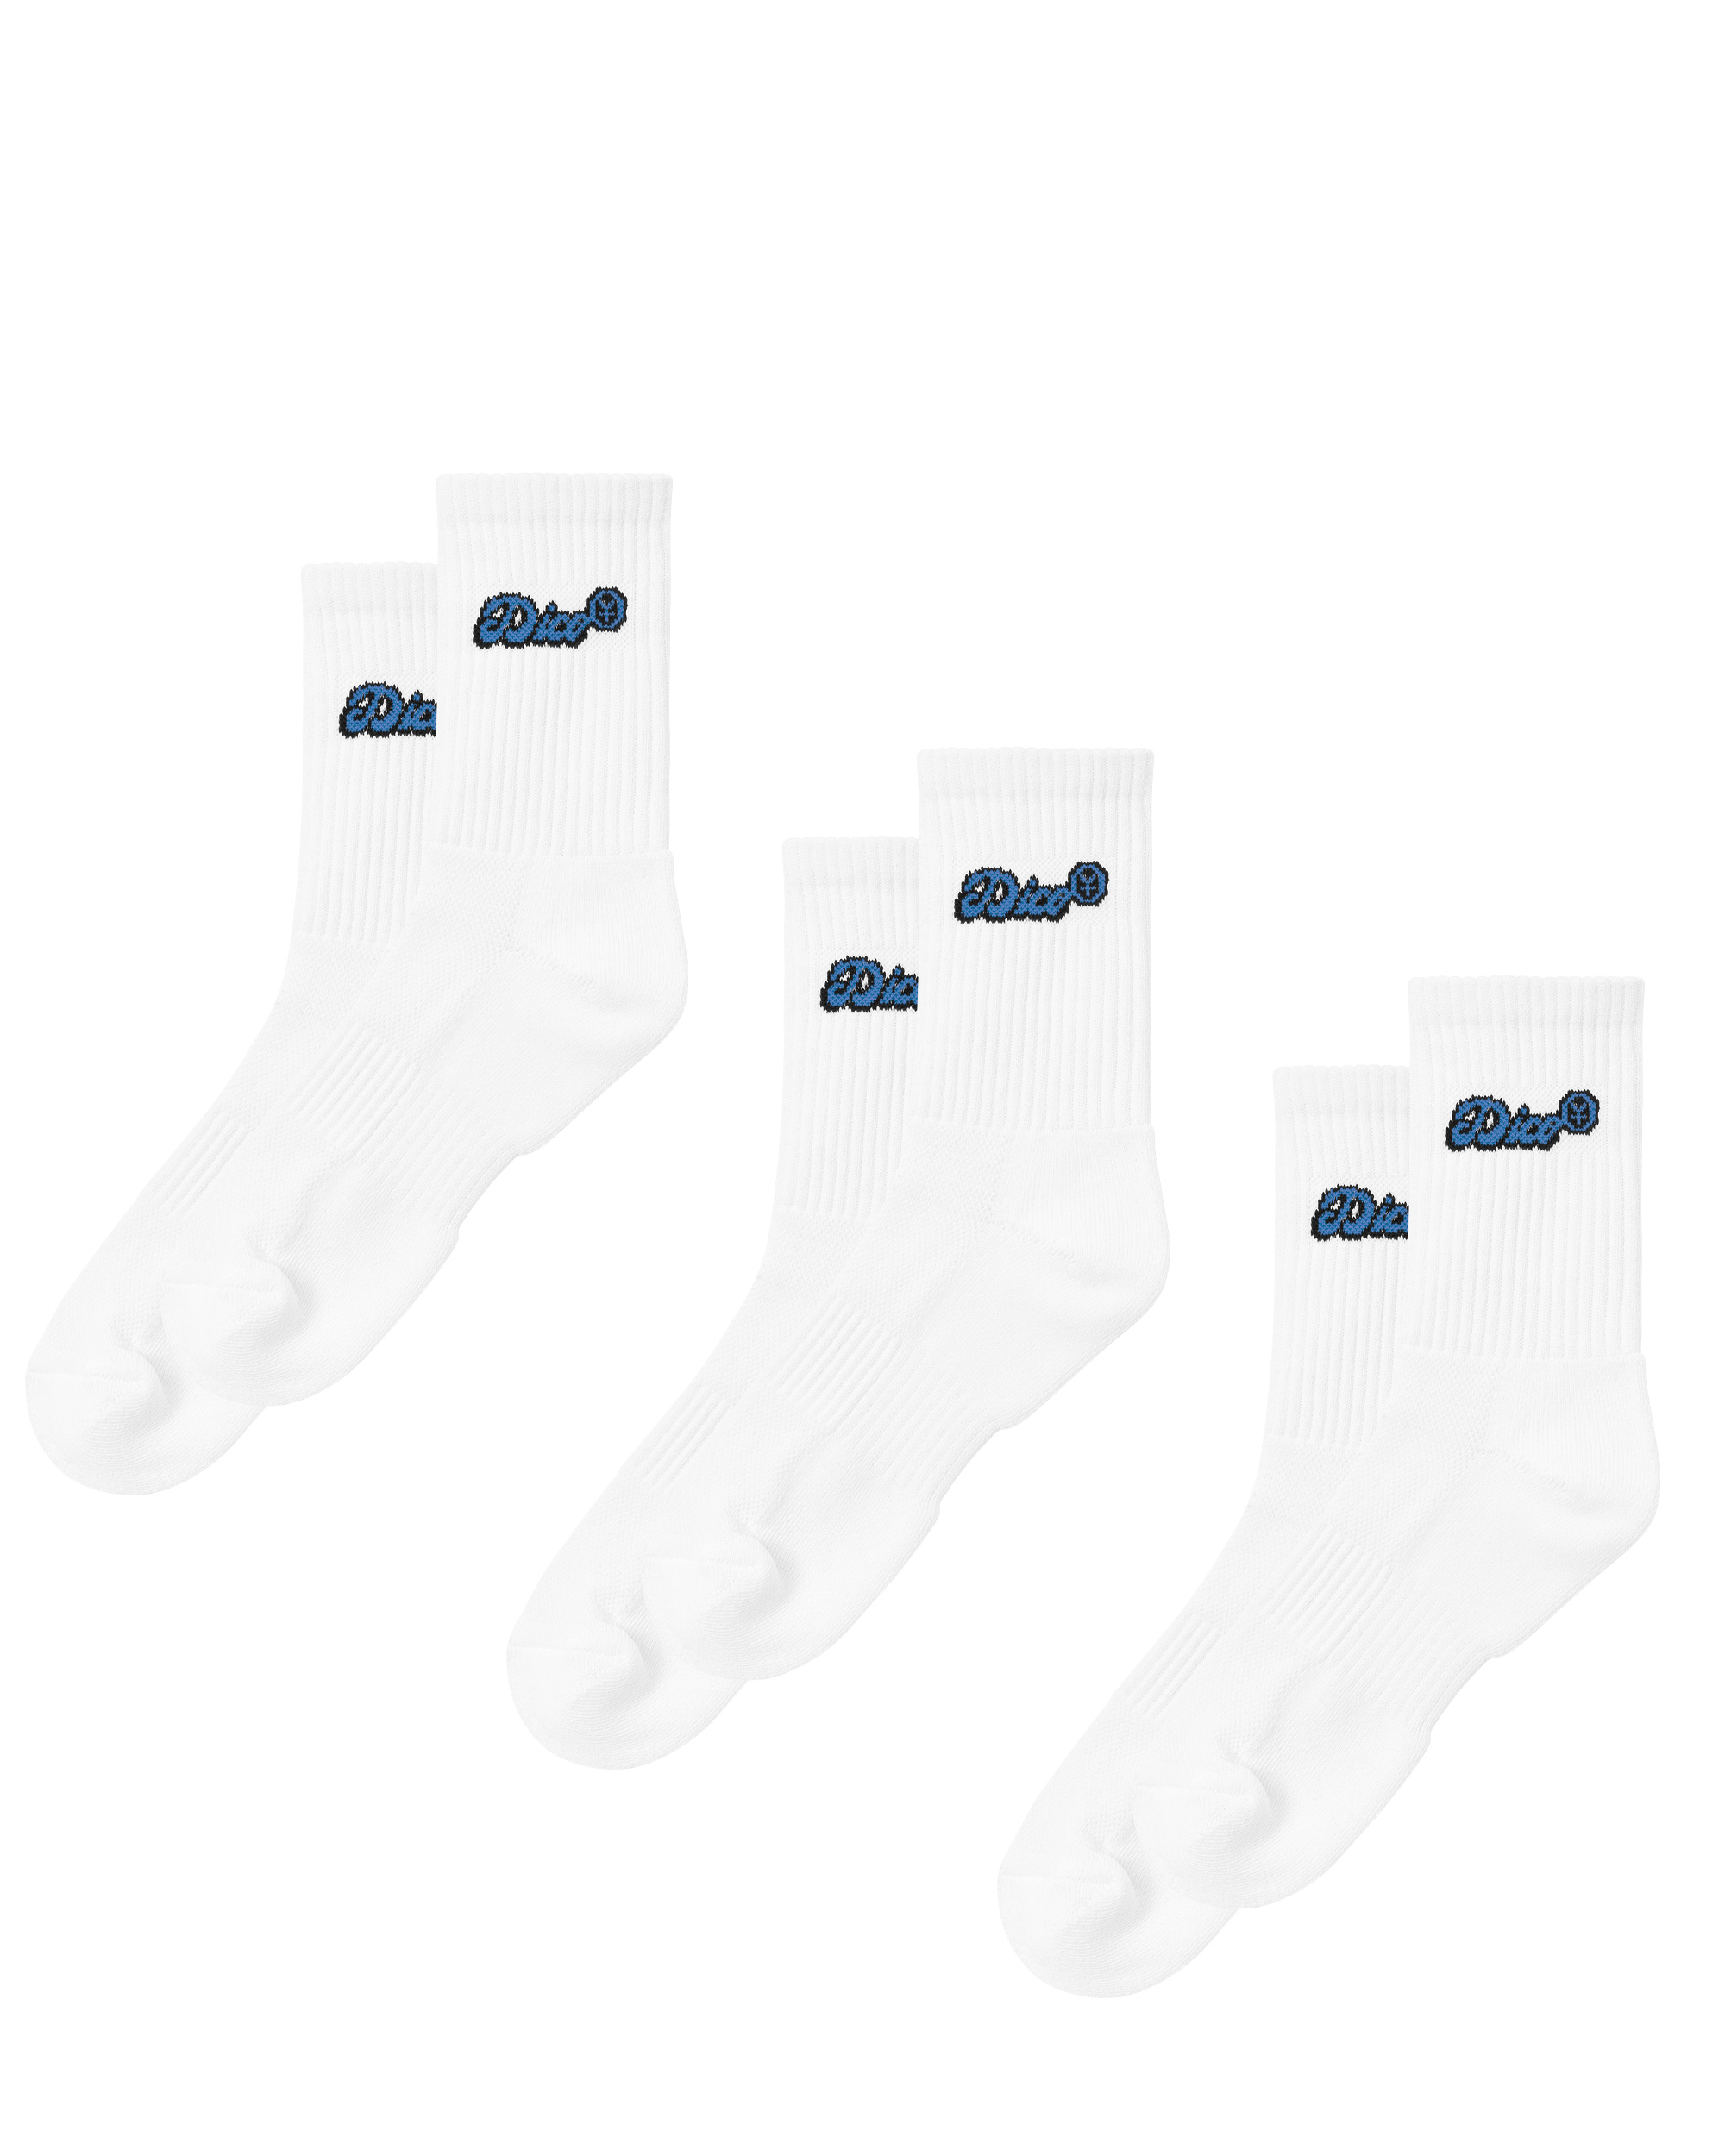 Dico Comfy Socks - Blue/White - Pack of 3